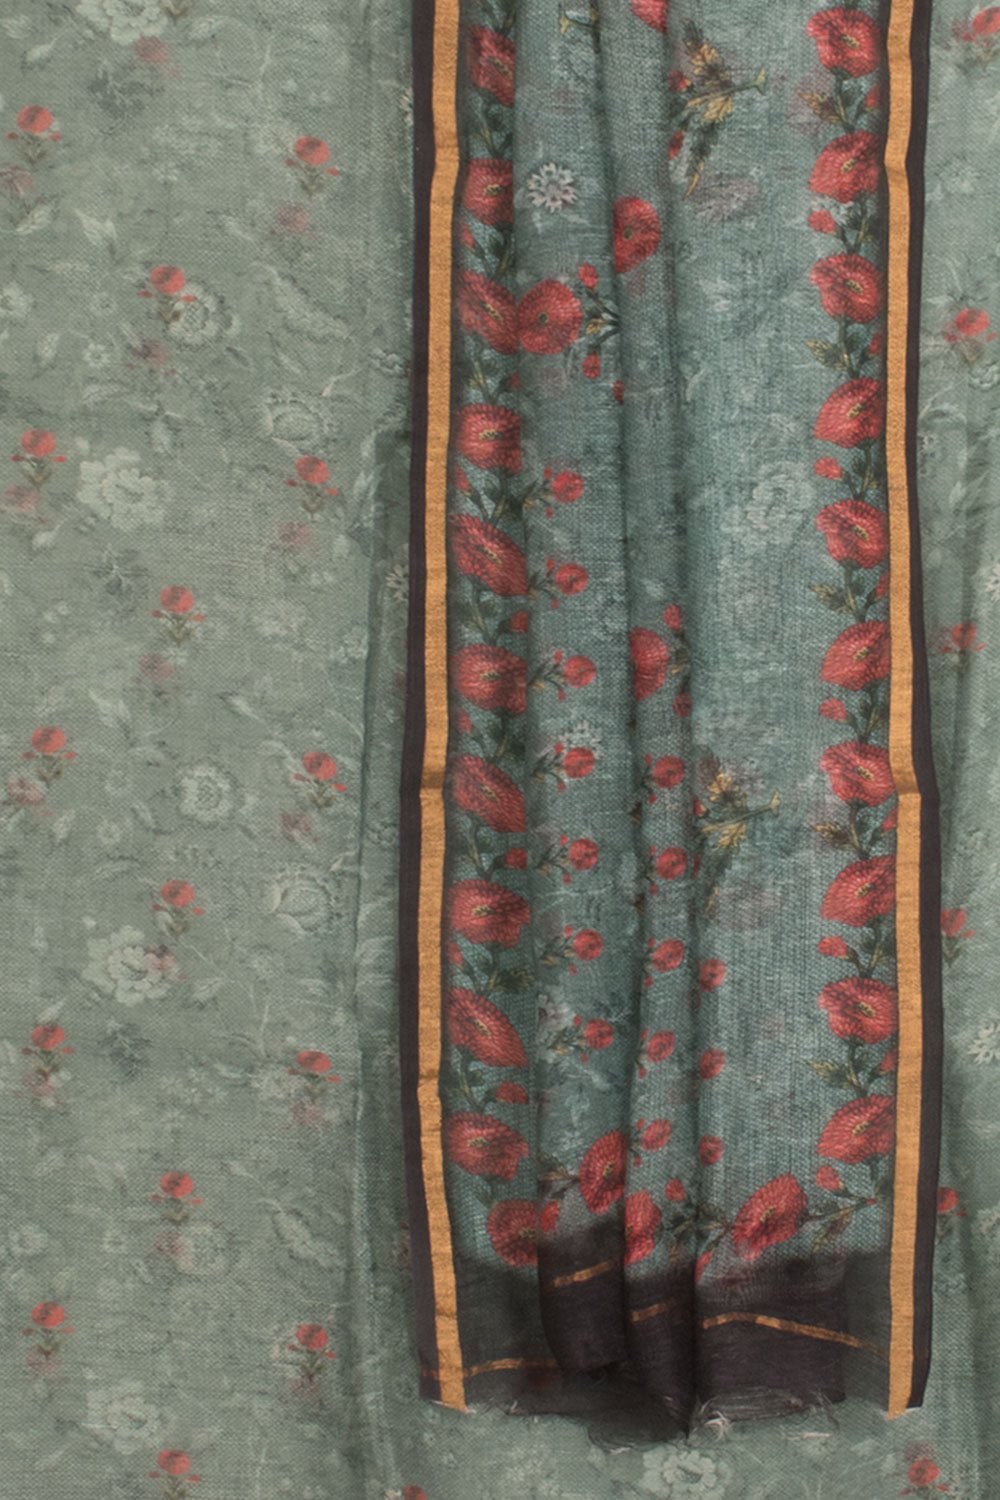 Digital Printed Linen 2-Piece Salwar Suit Material with Floral Design